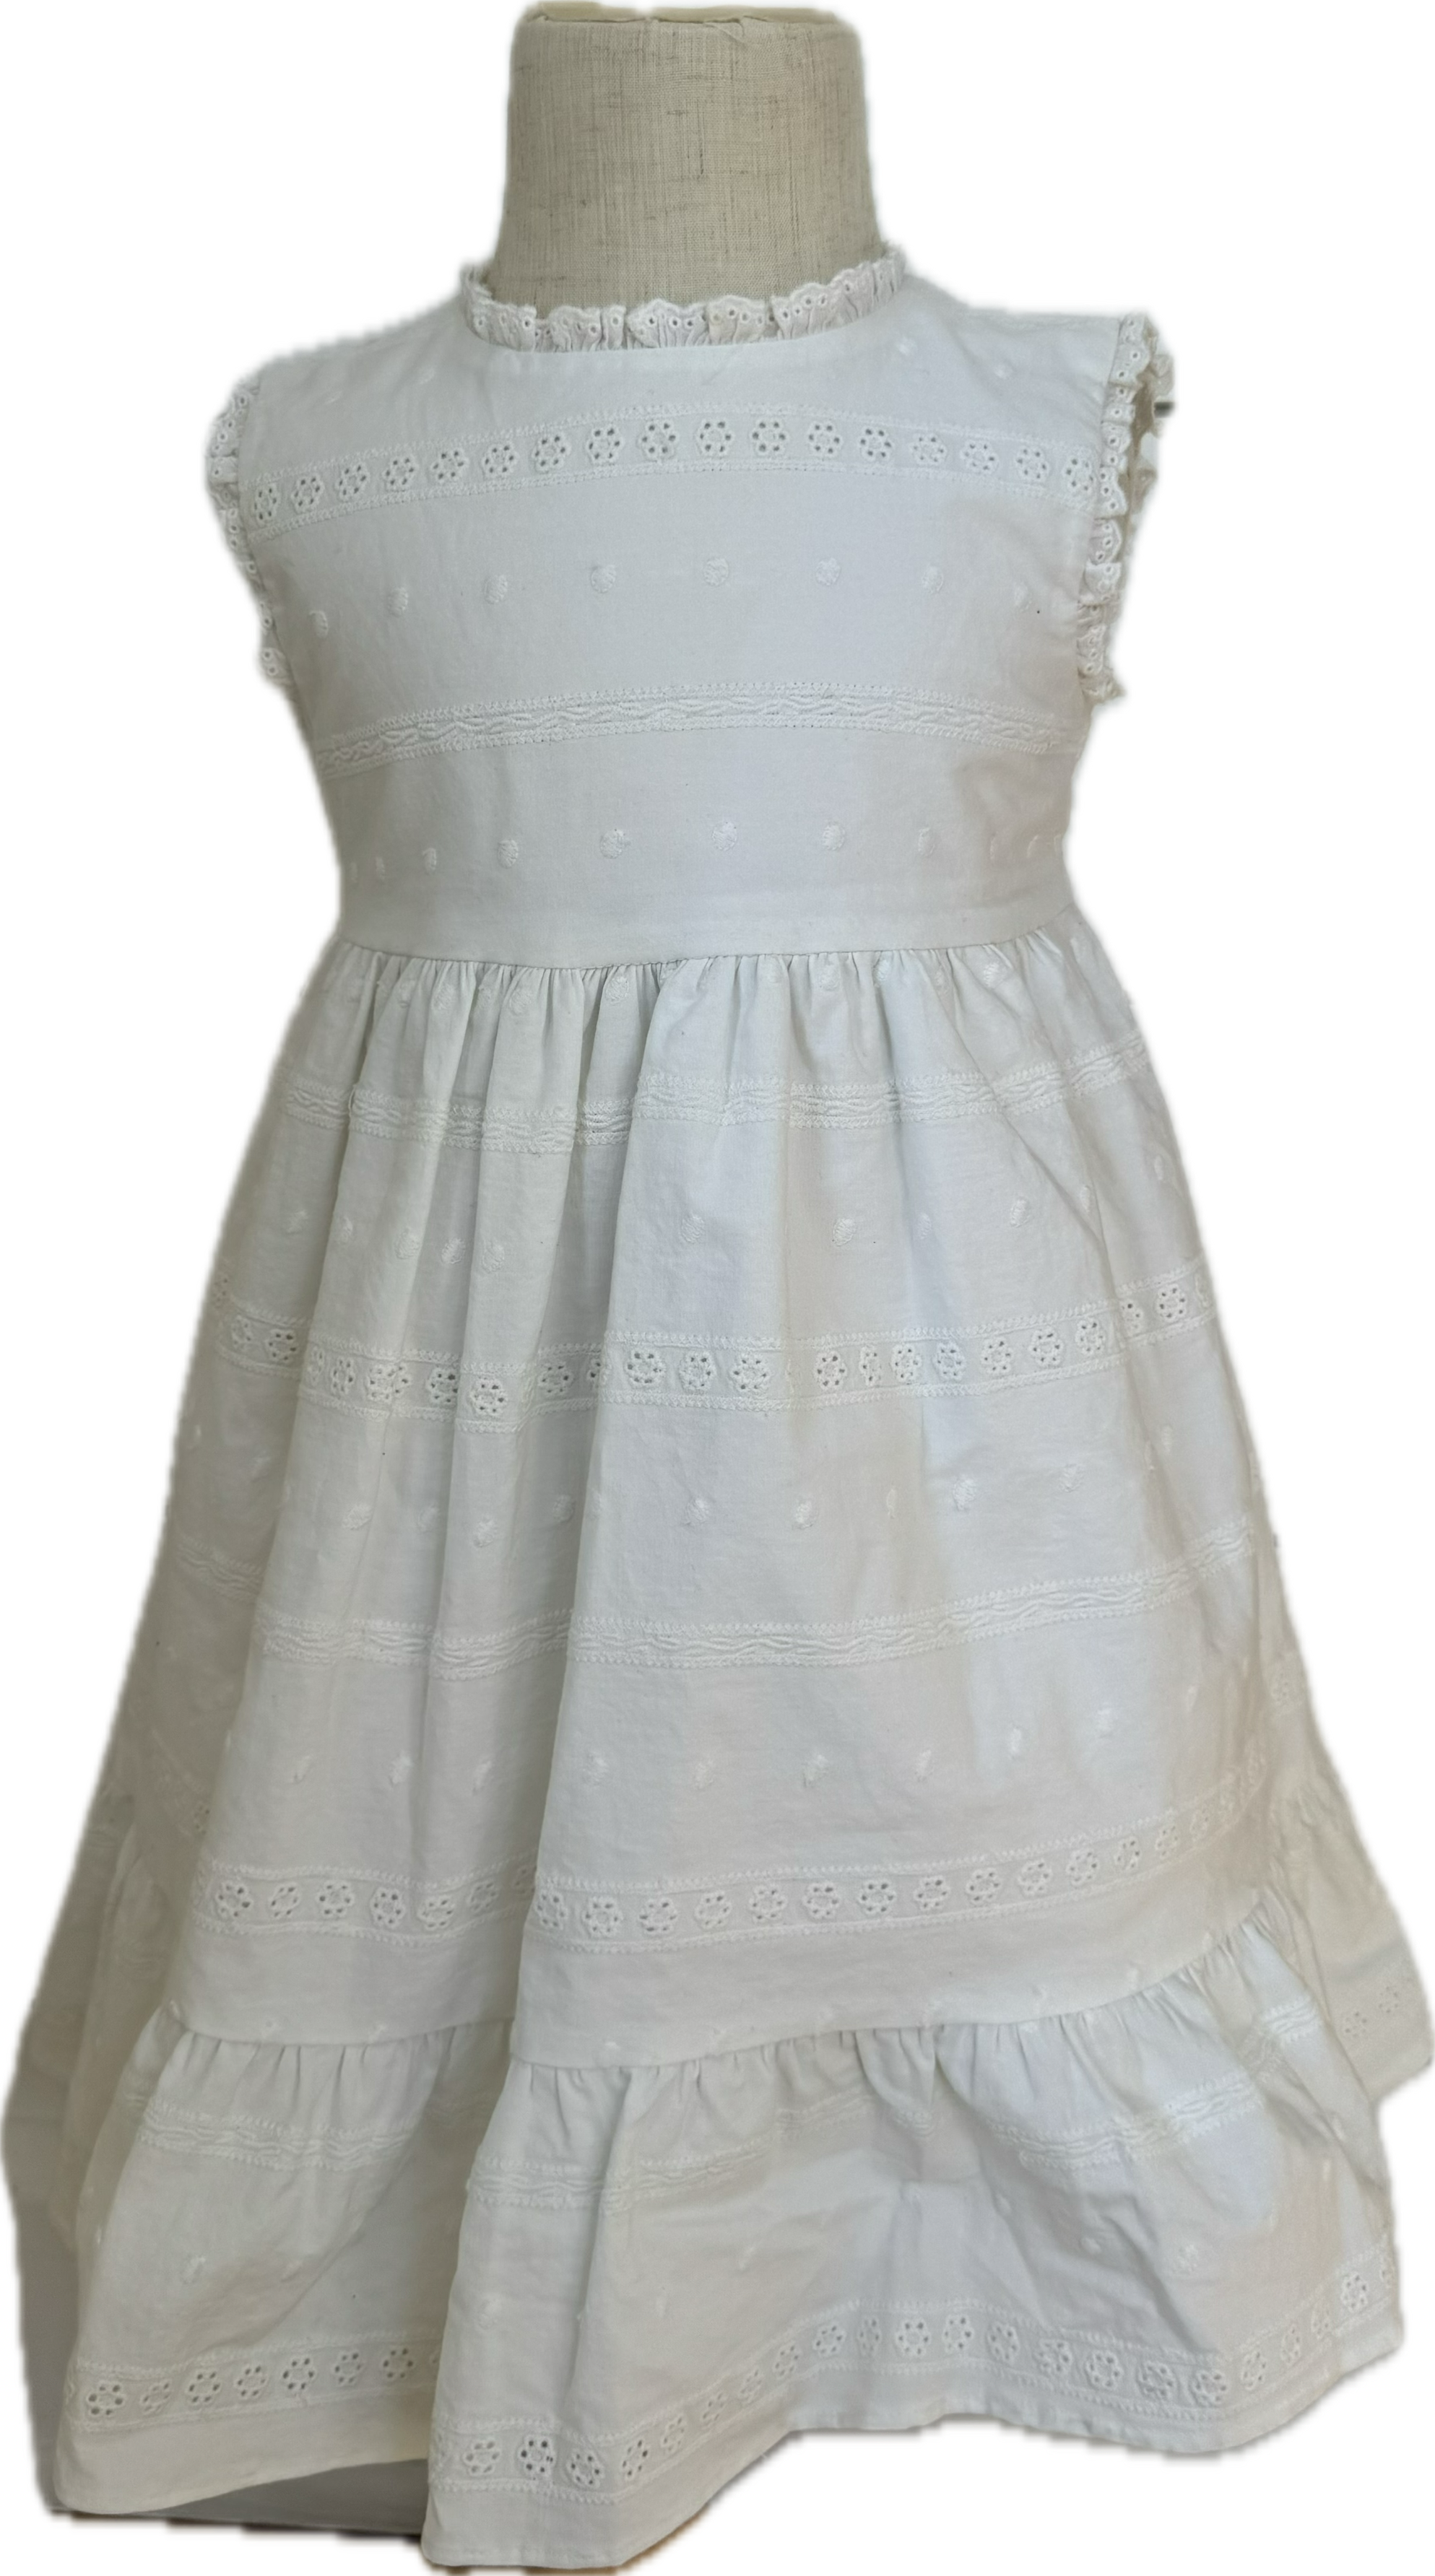 Talbots Kids Eyelet Dress, White Girls Size 18 mo.